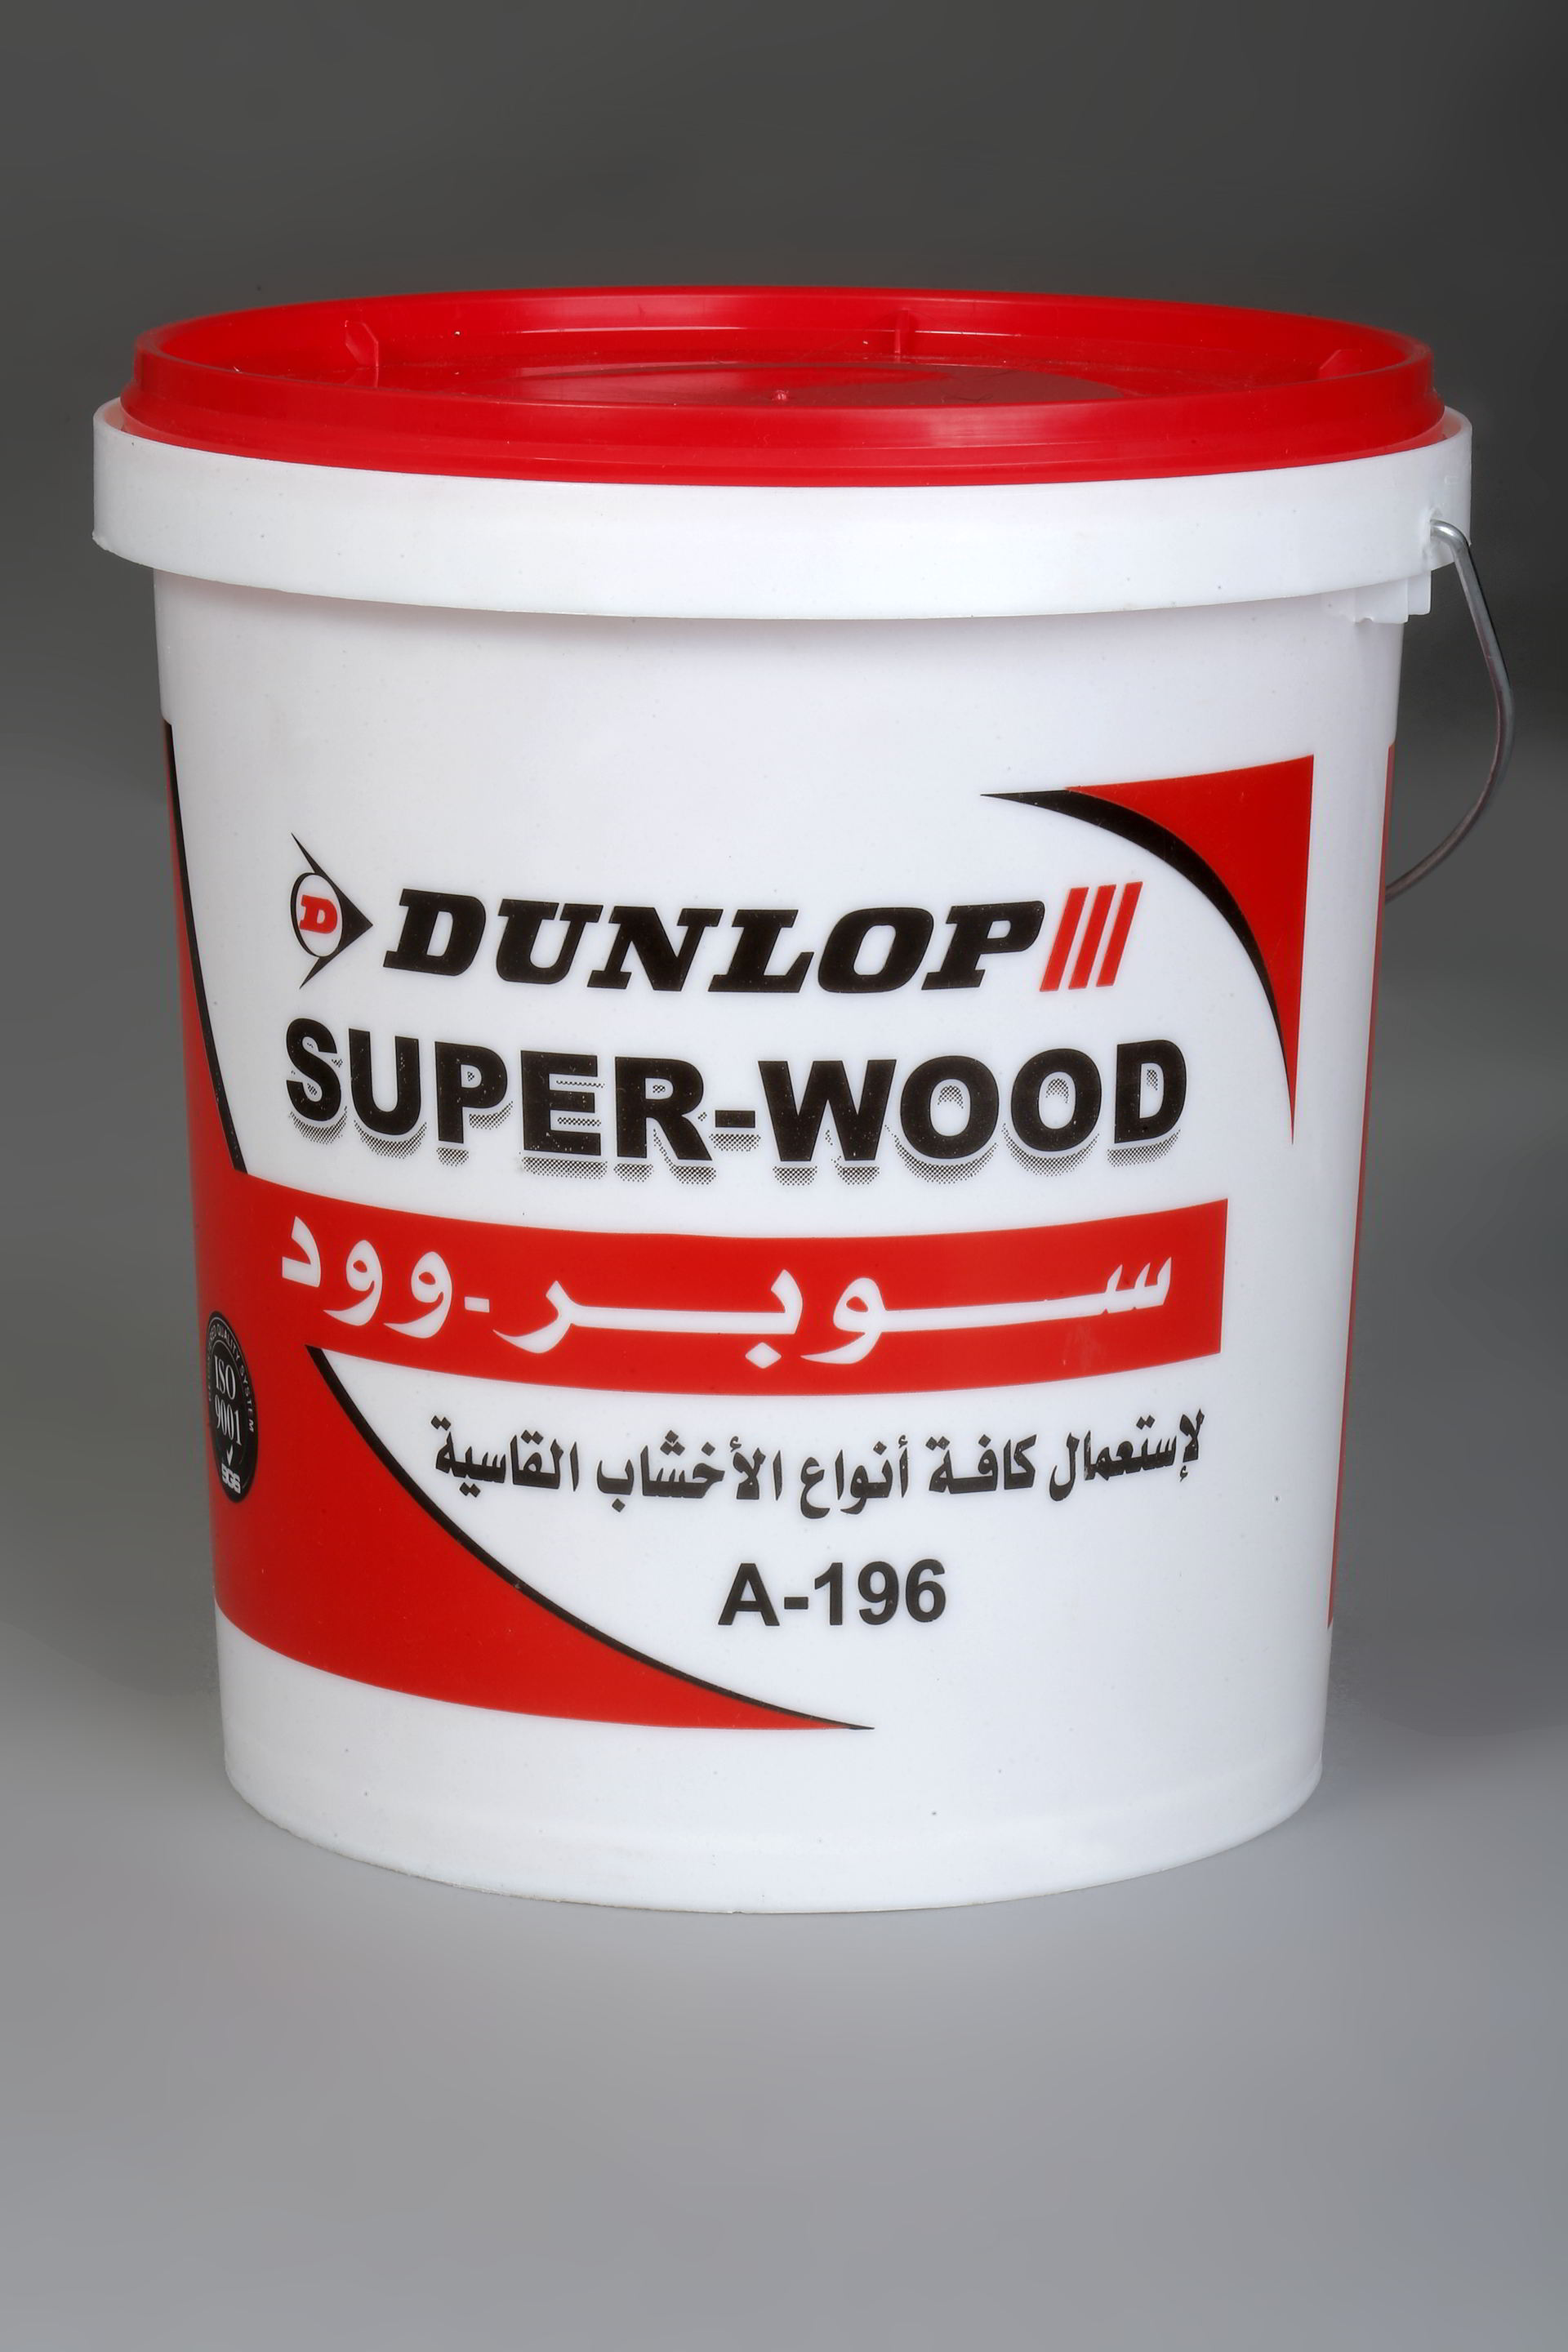 Dunlop A.196 super wood adhesive